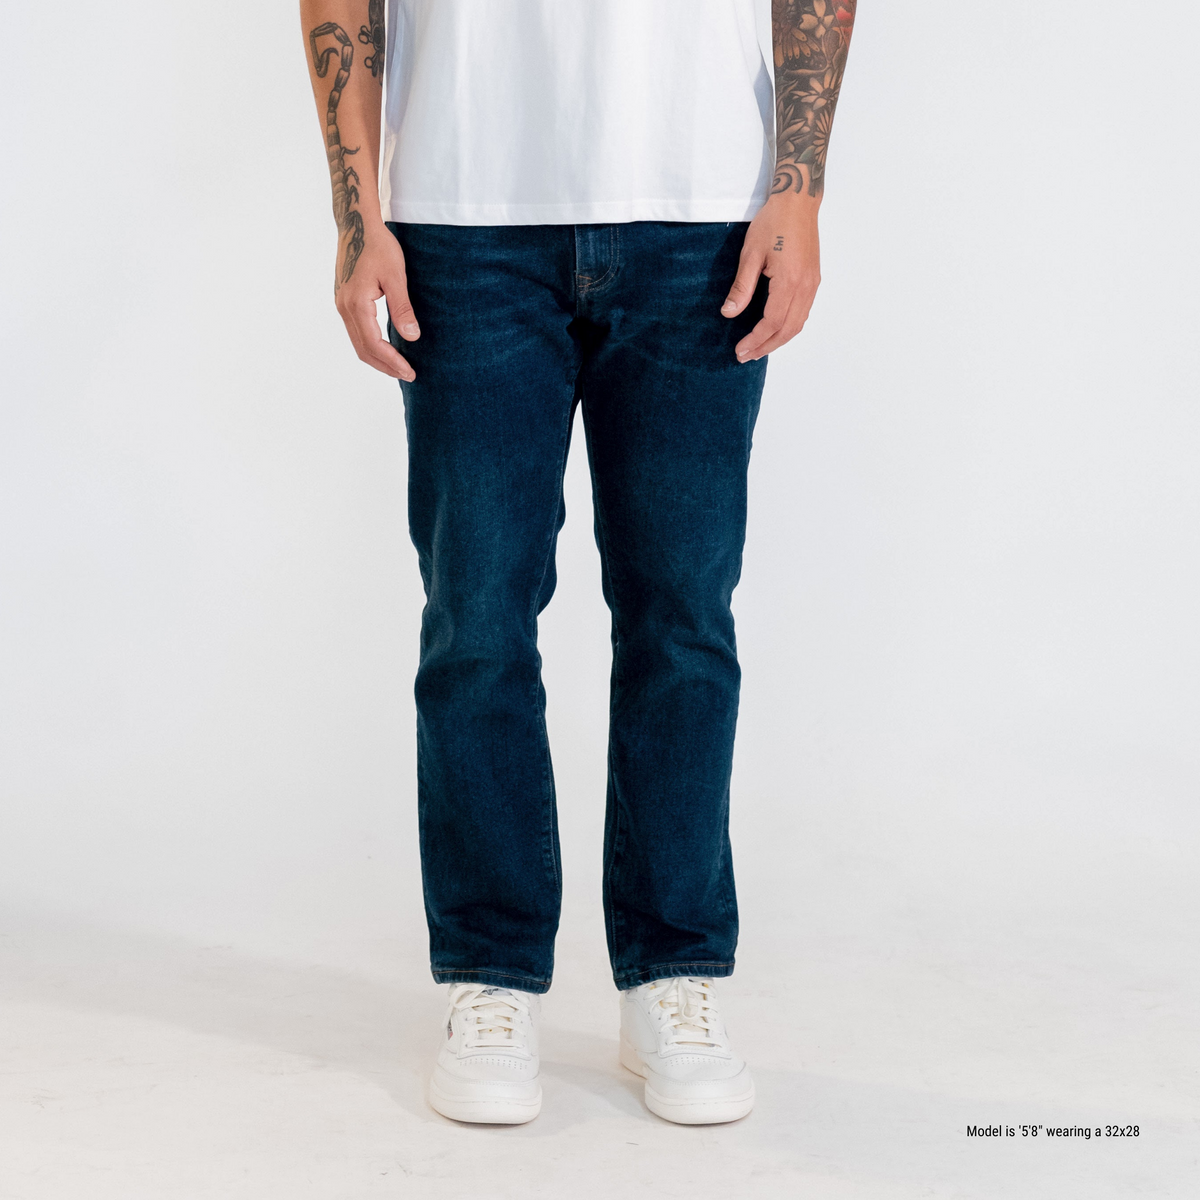 – Abbreviated for Apparel Shorter Fit Jeans Slim Men